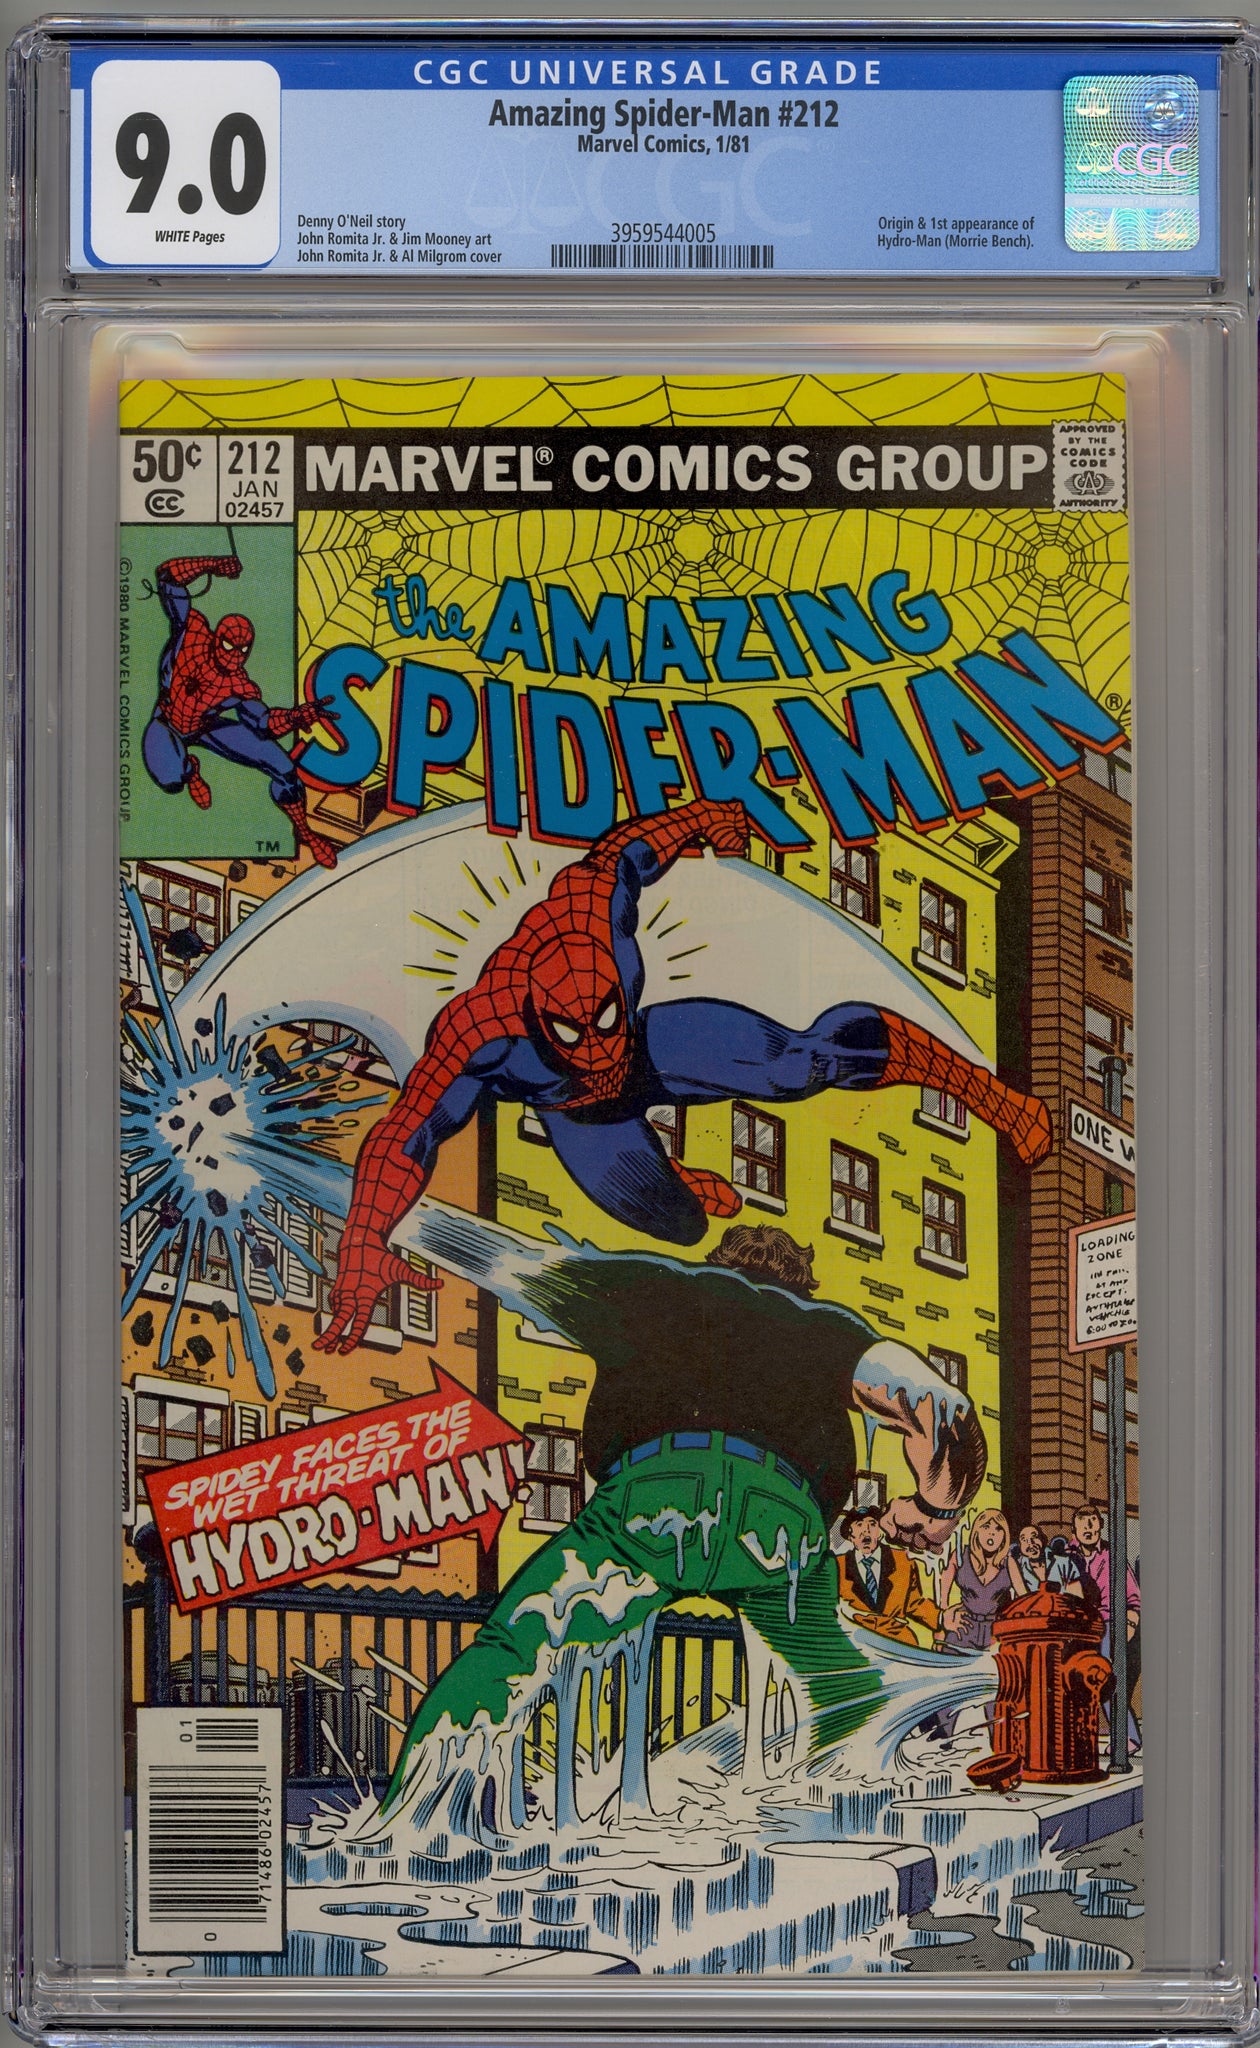 Amazing Spider-Man #212 (1981) Hydro-Man